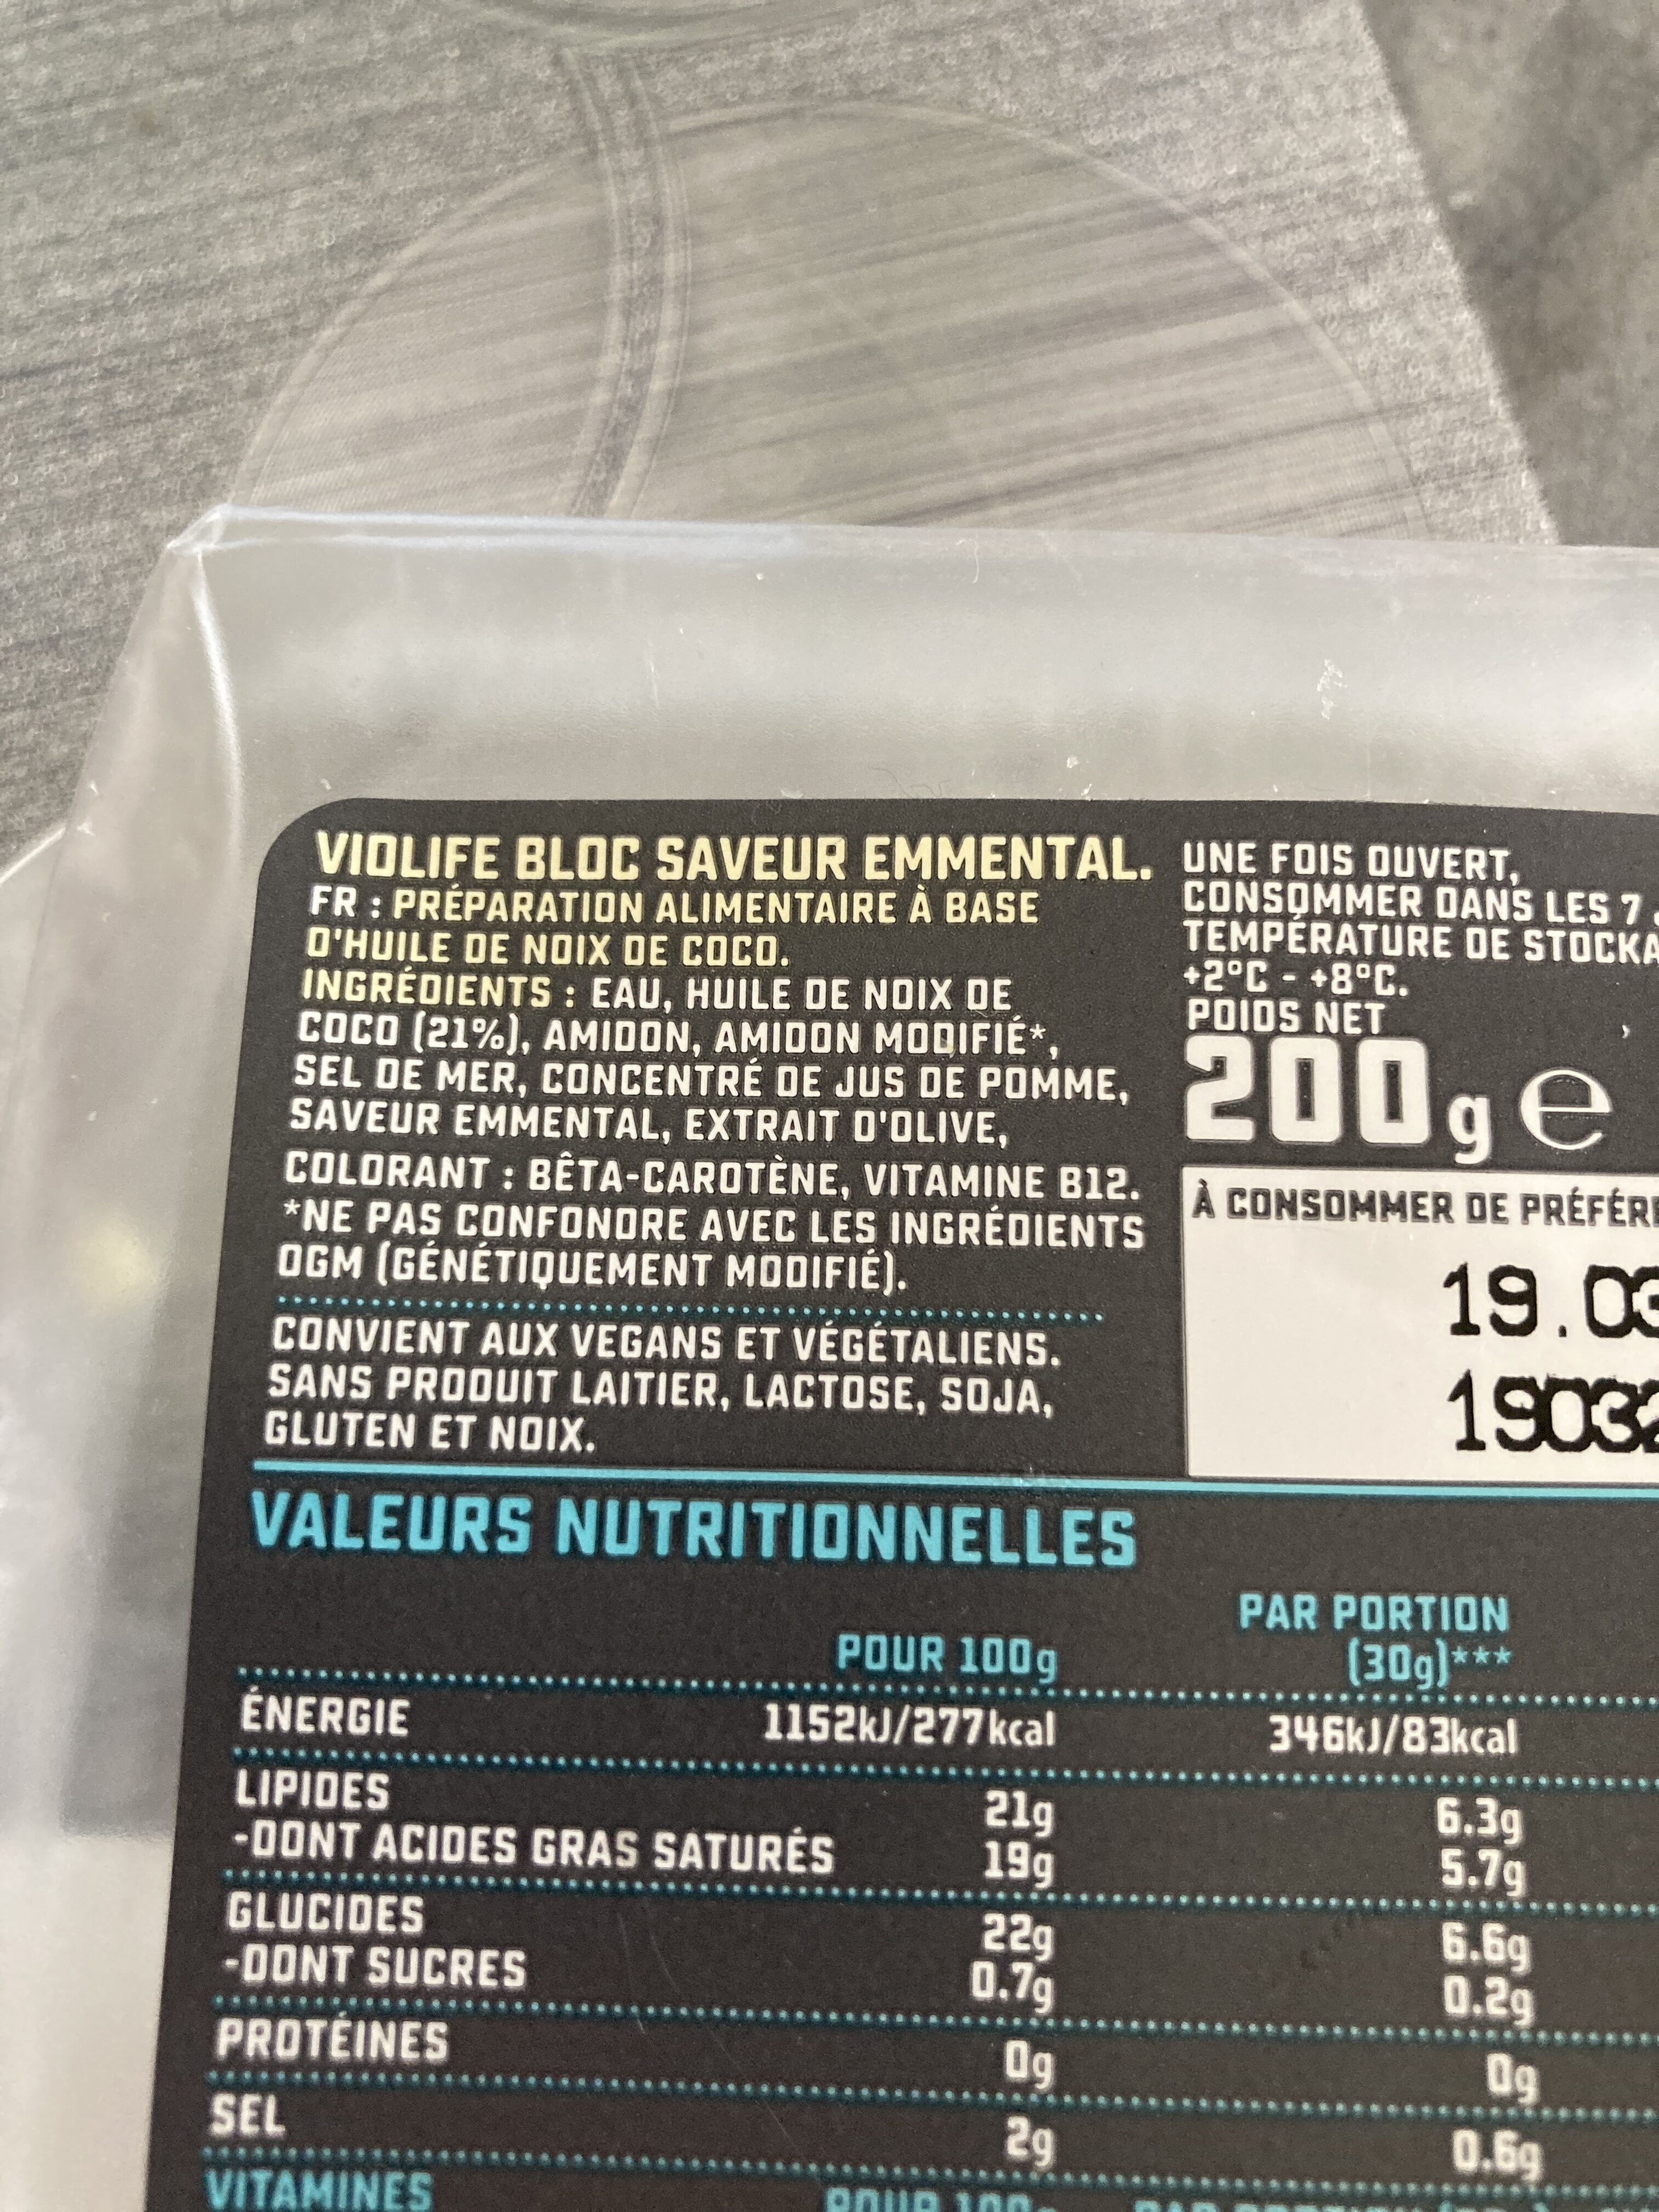 Bloc saveur Emmental - Ingredients - fr